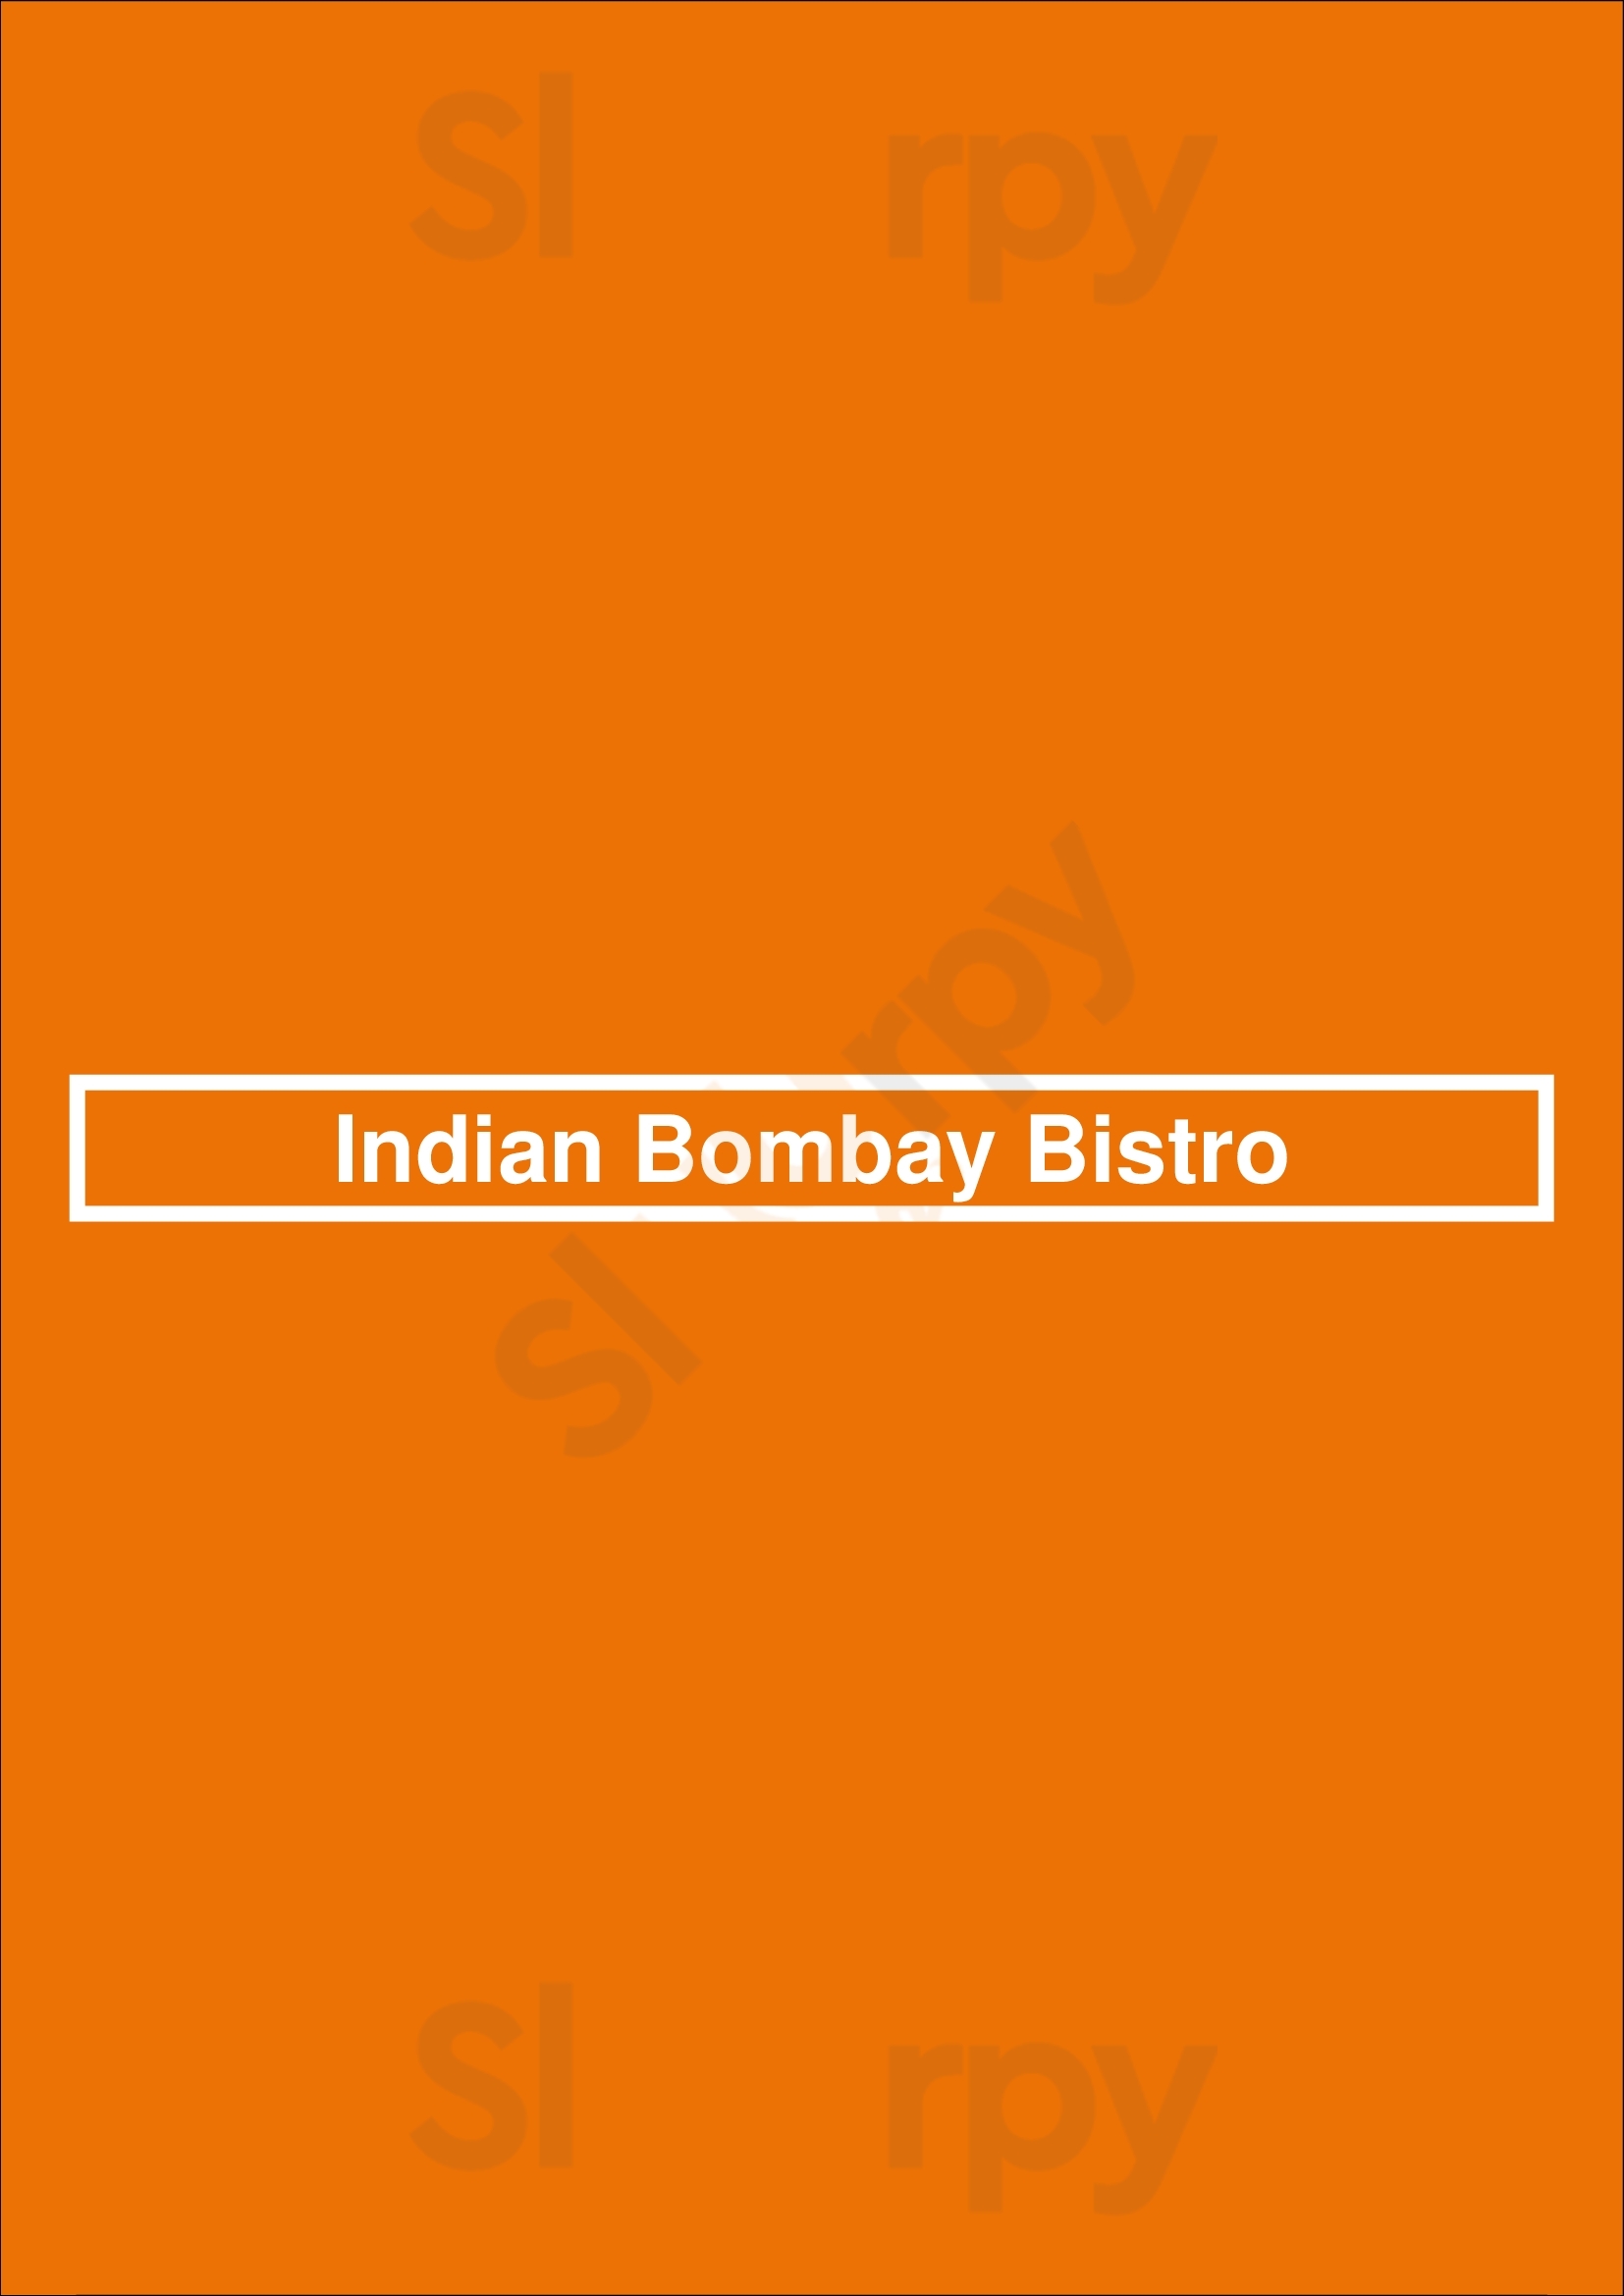 Indian Bombay Bistro Burnaby Menu - 1